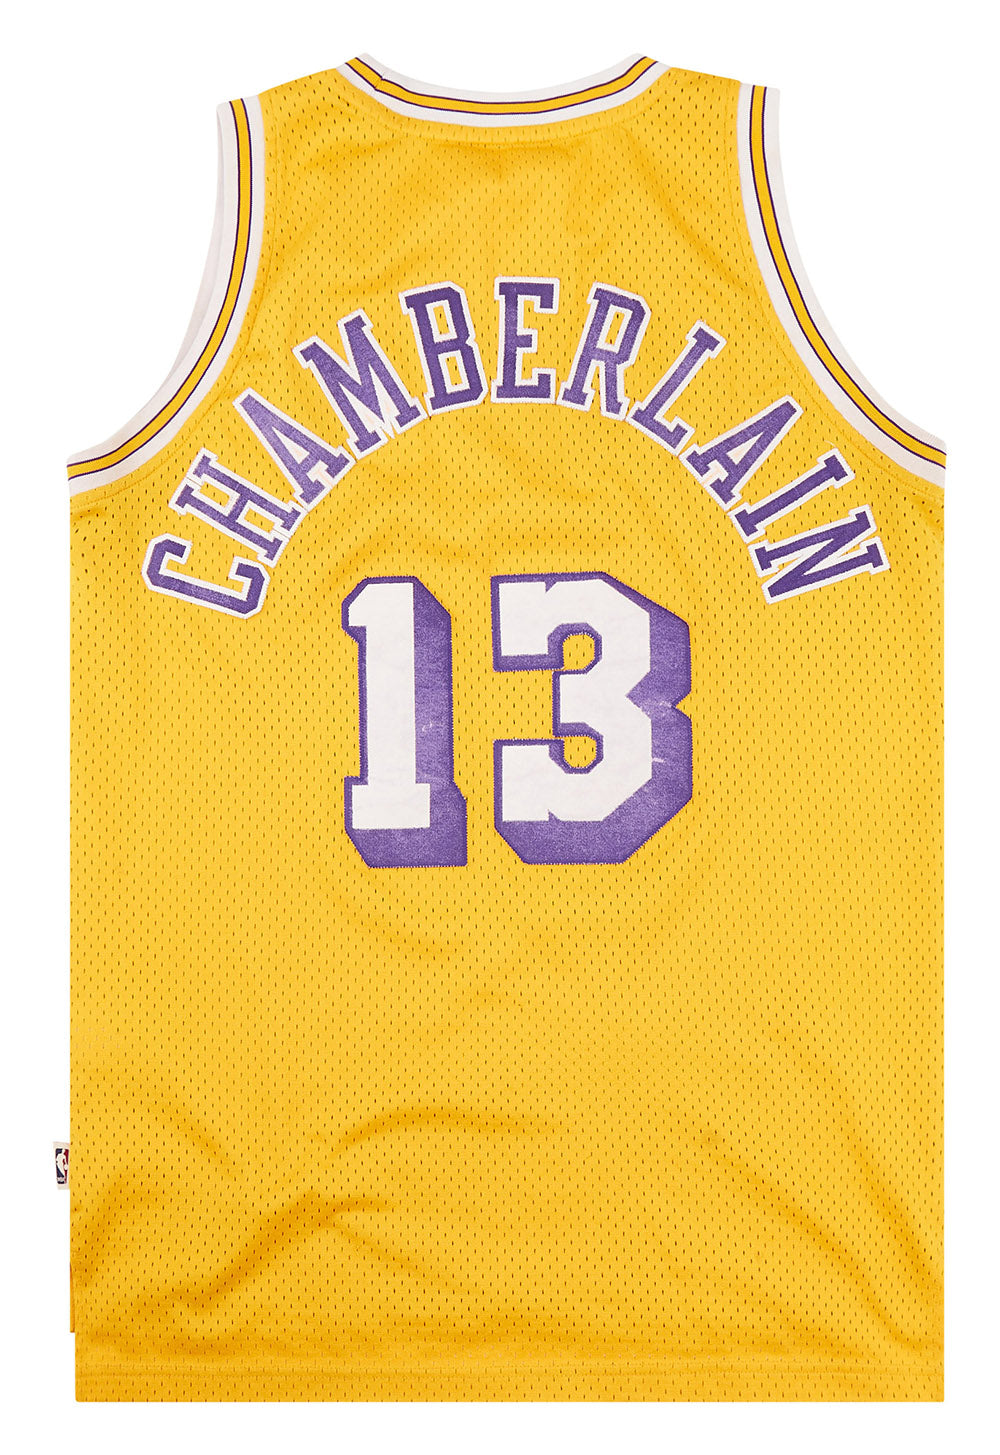 🔥🔥Kobe Bryant Lakers hardwood classic jersey🔥🔥